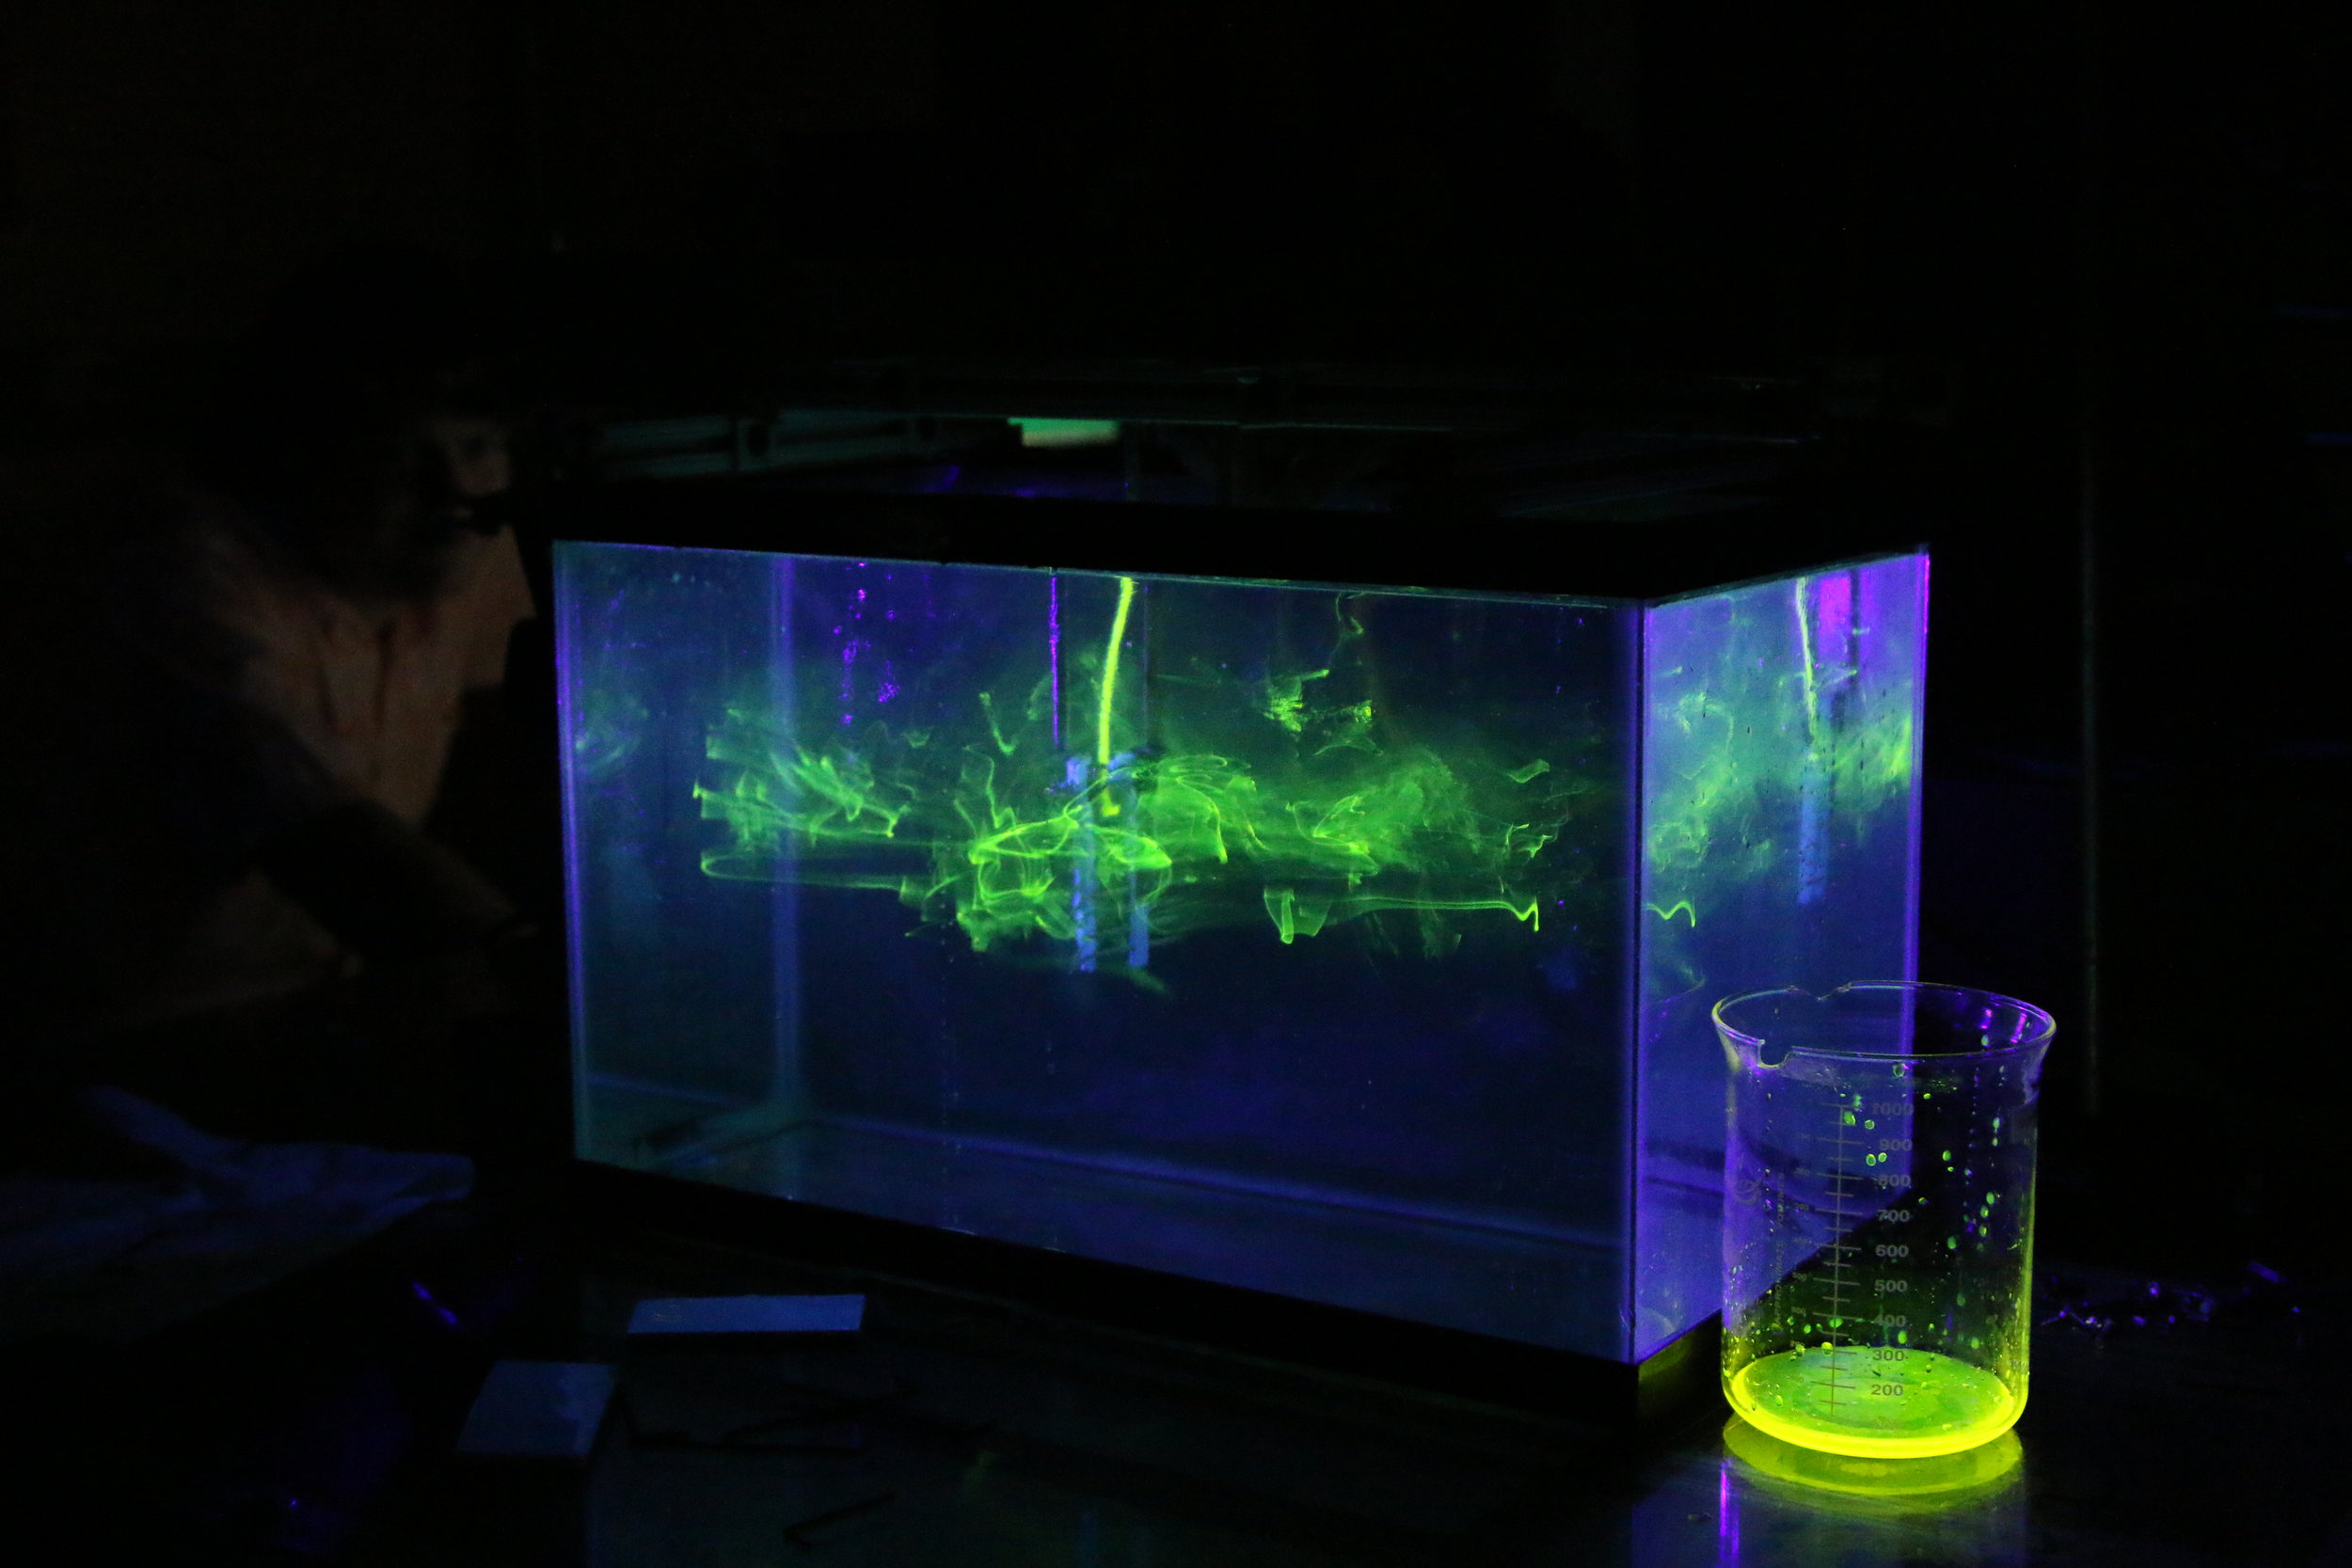  Flow visualization using florescent dye 